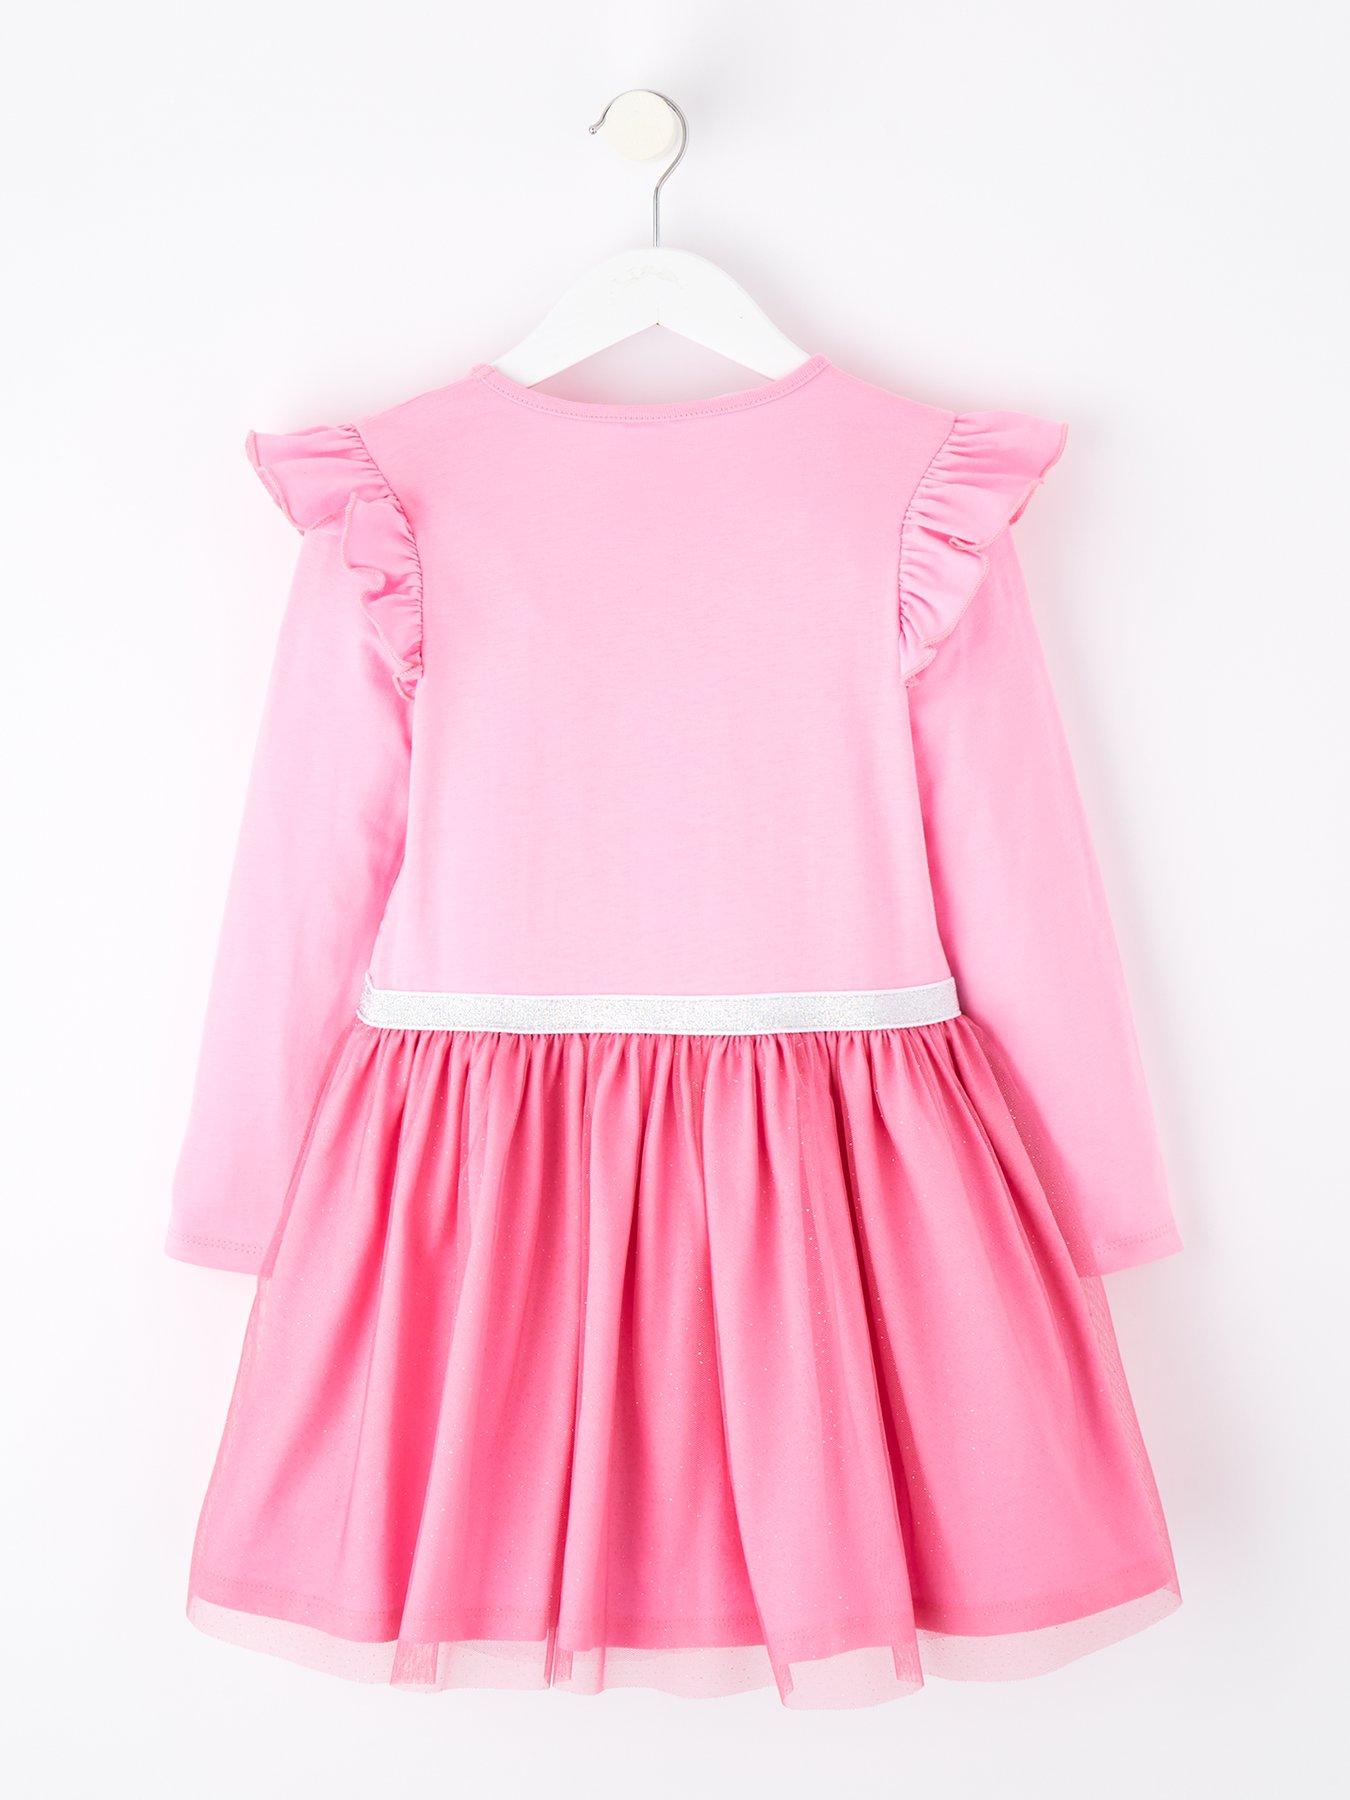 L.O.L Surprise! Glitter Tulle Tutu Dress - Pink | very.co.uk